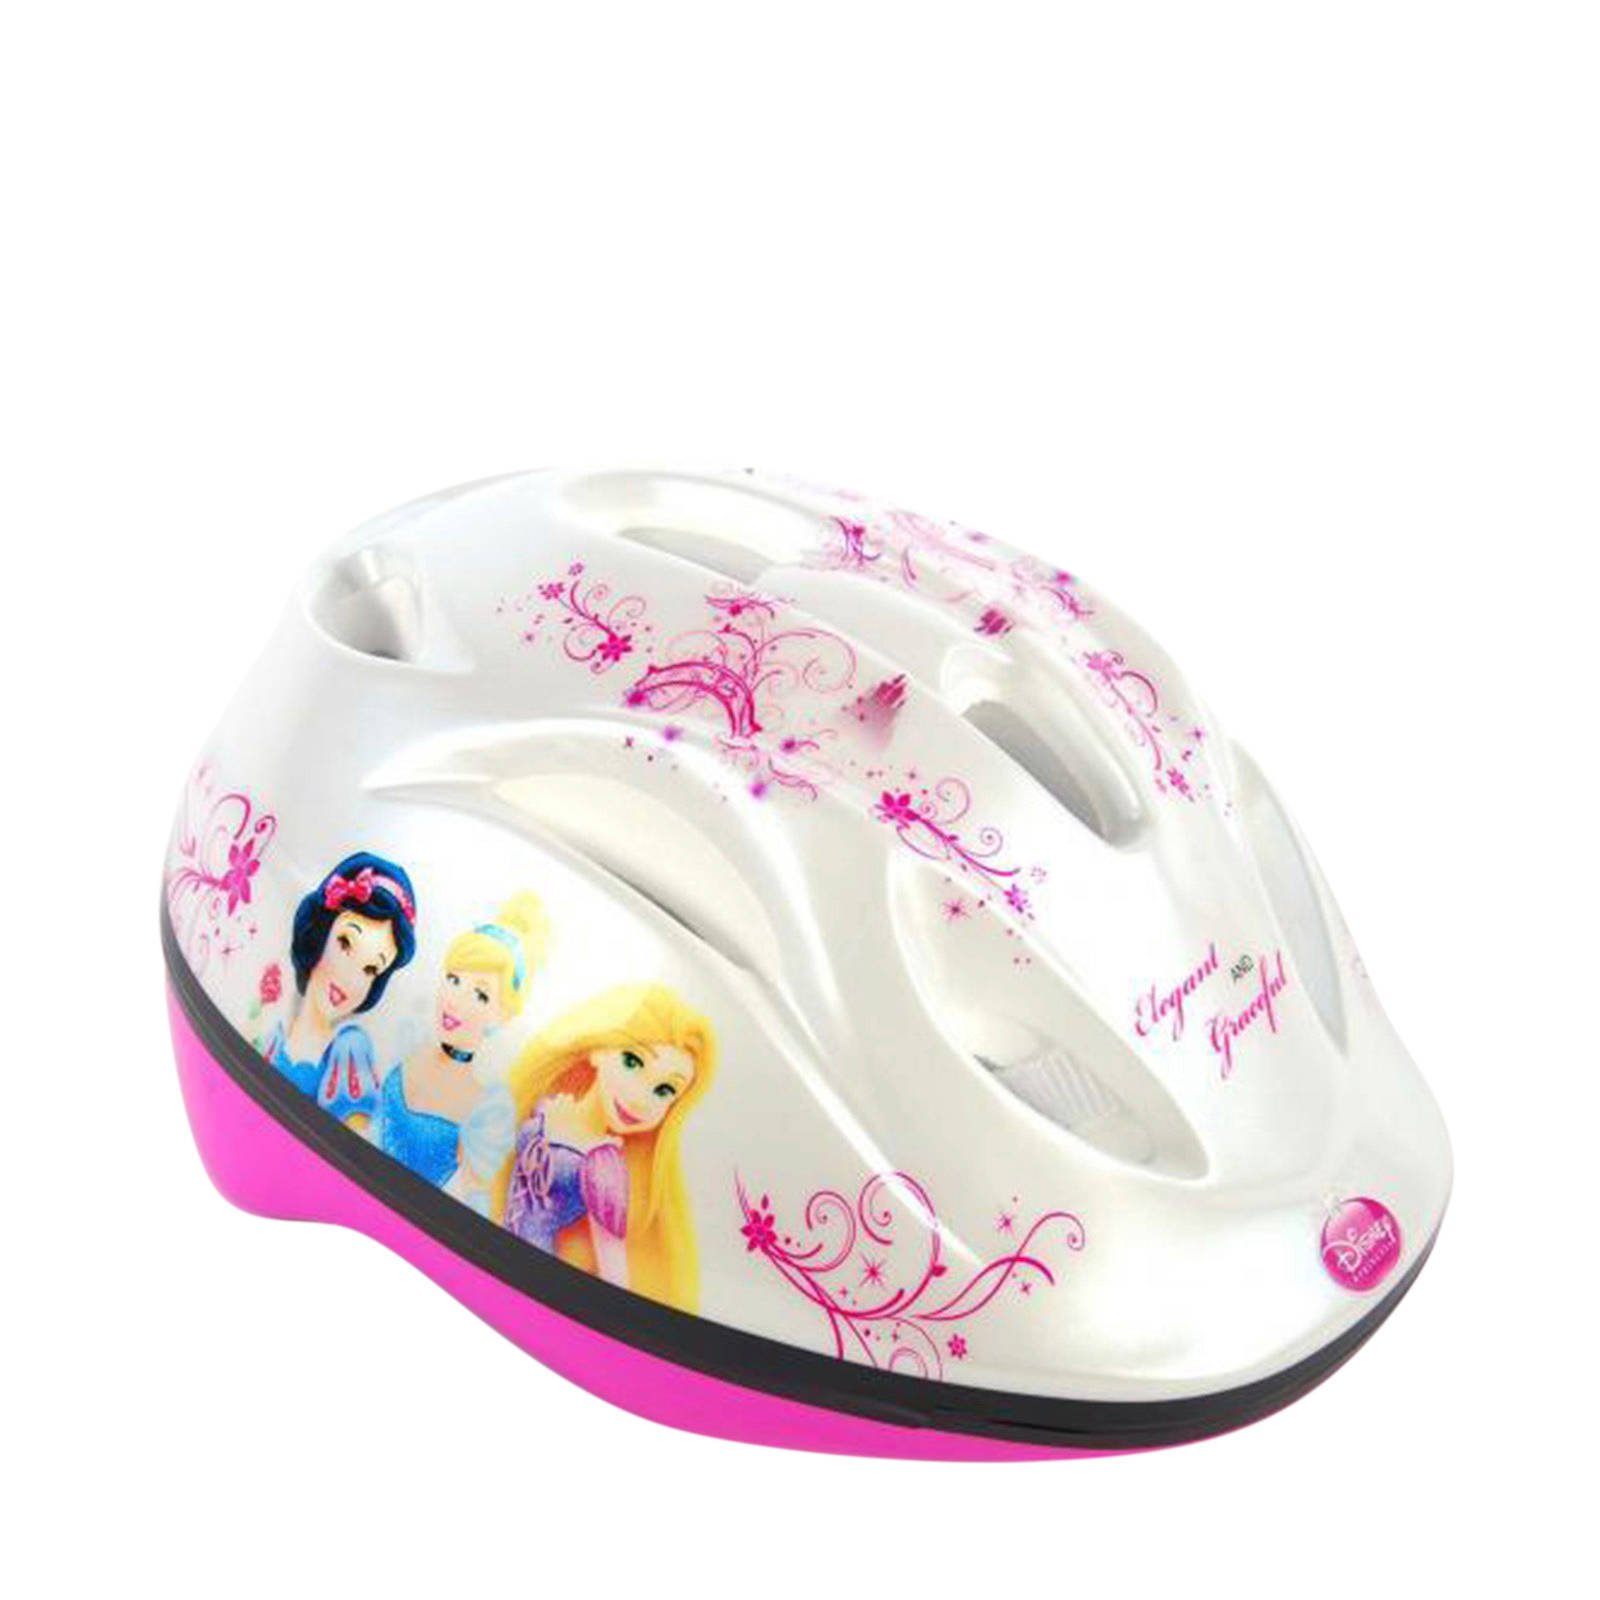 Disney Princess fietshelm meisjes skatehelm 51 55 cm online kopen